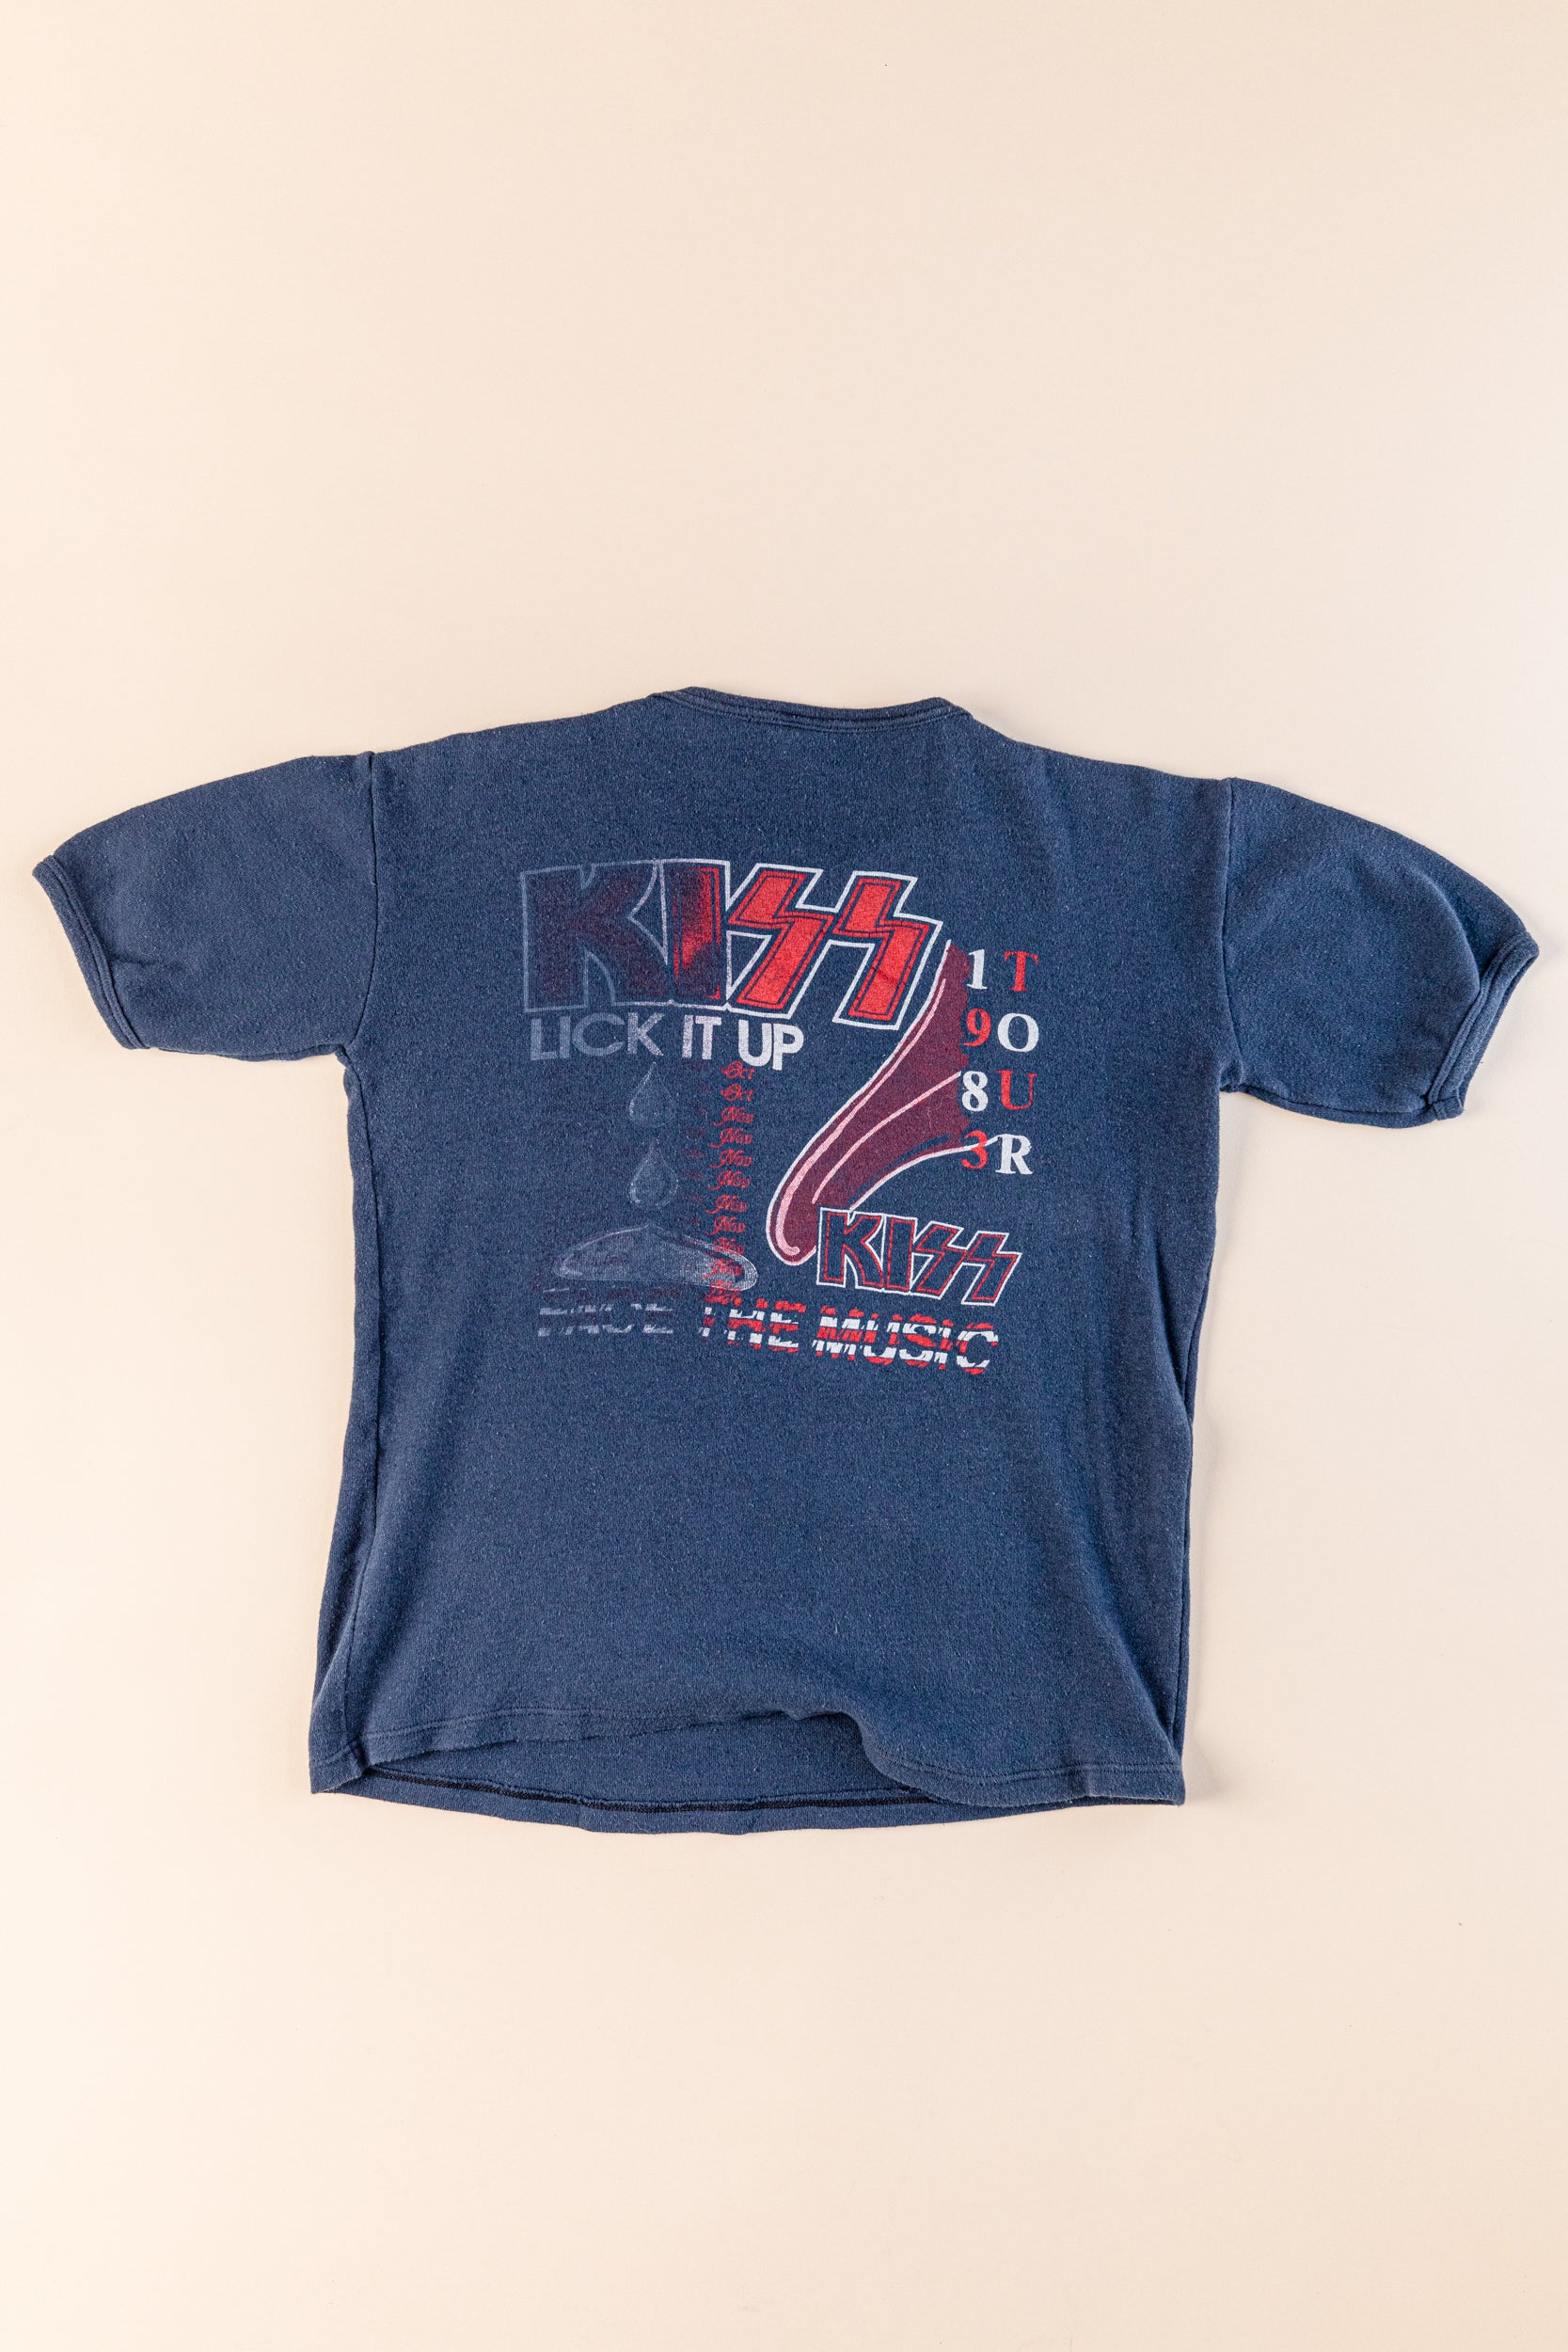 Vintage Kiss Lick it up Europe Tour 1983 t-shirt (Men's Small